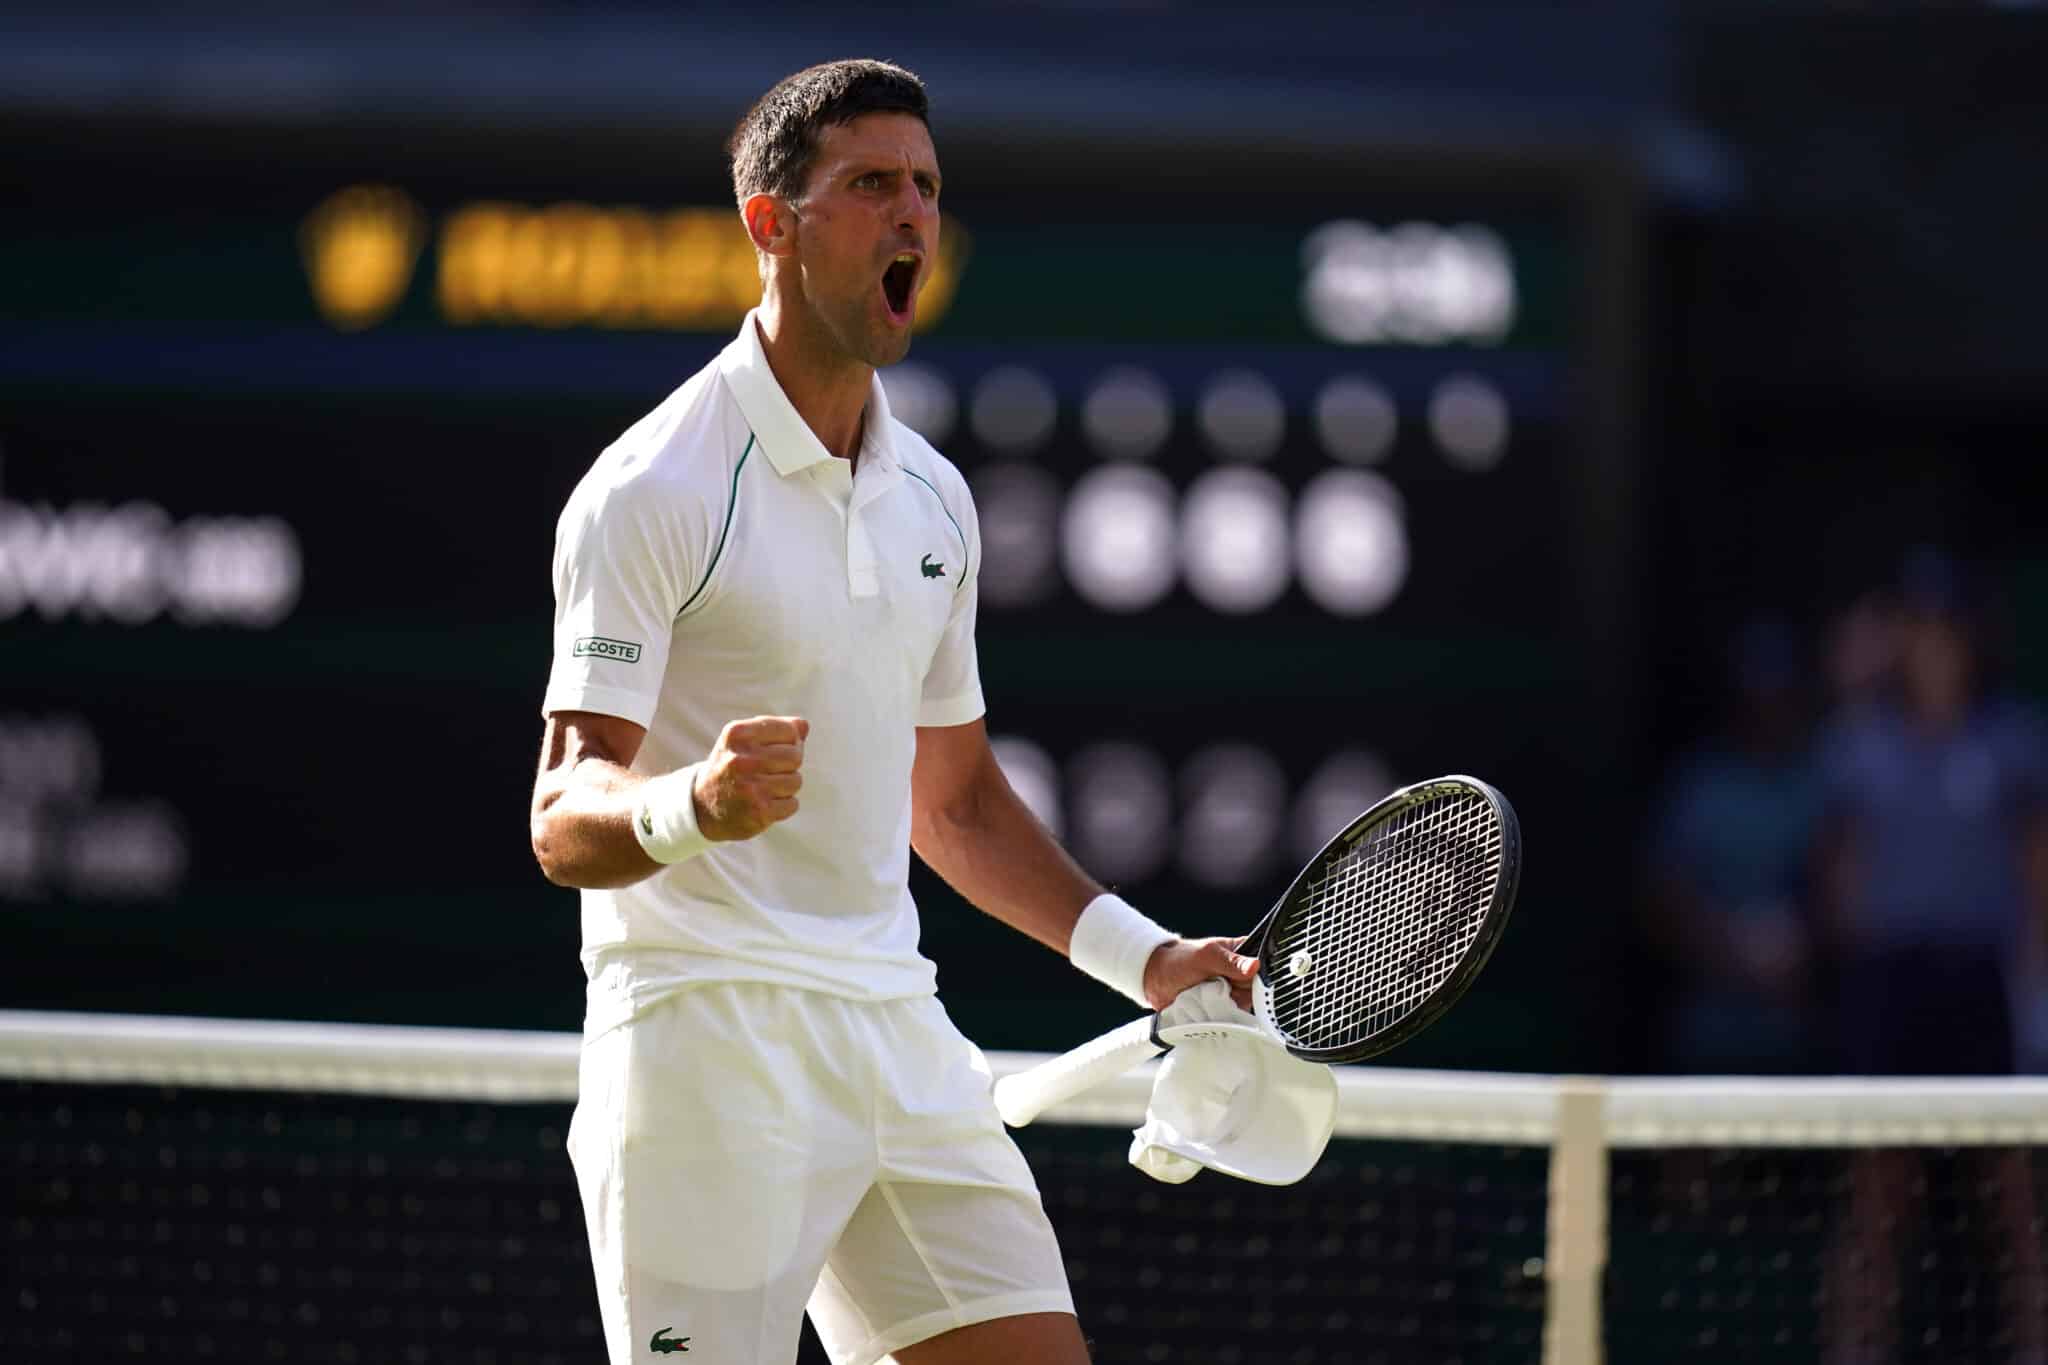 Novak Djokovic dressed in all-white at Wimbledon